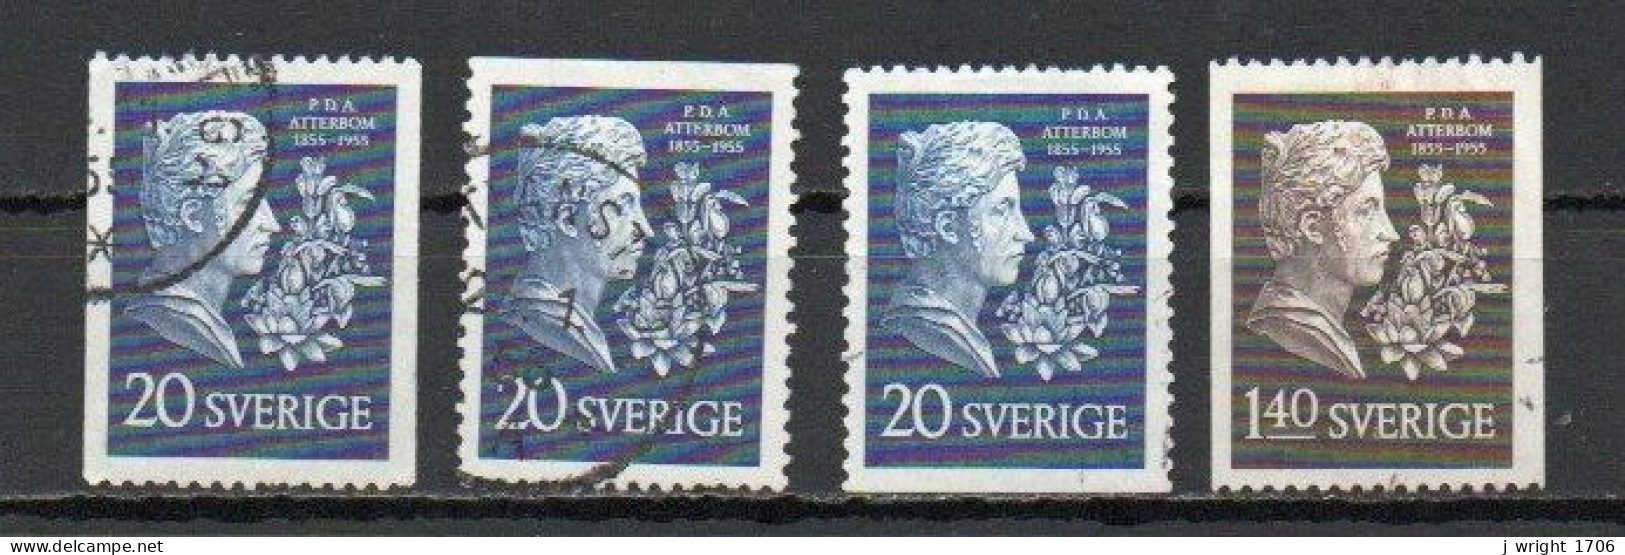 Sweden, 1955, Per Daniel Amadeus Atterbom, Set, USED  - Used Stamps